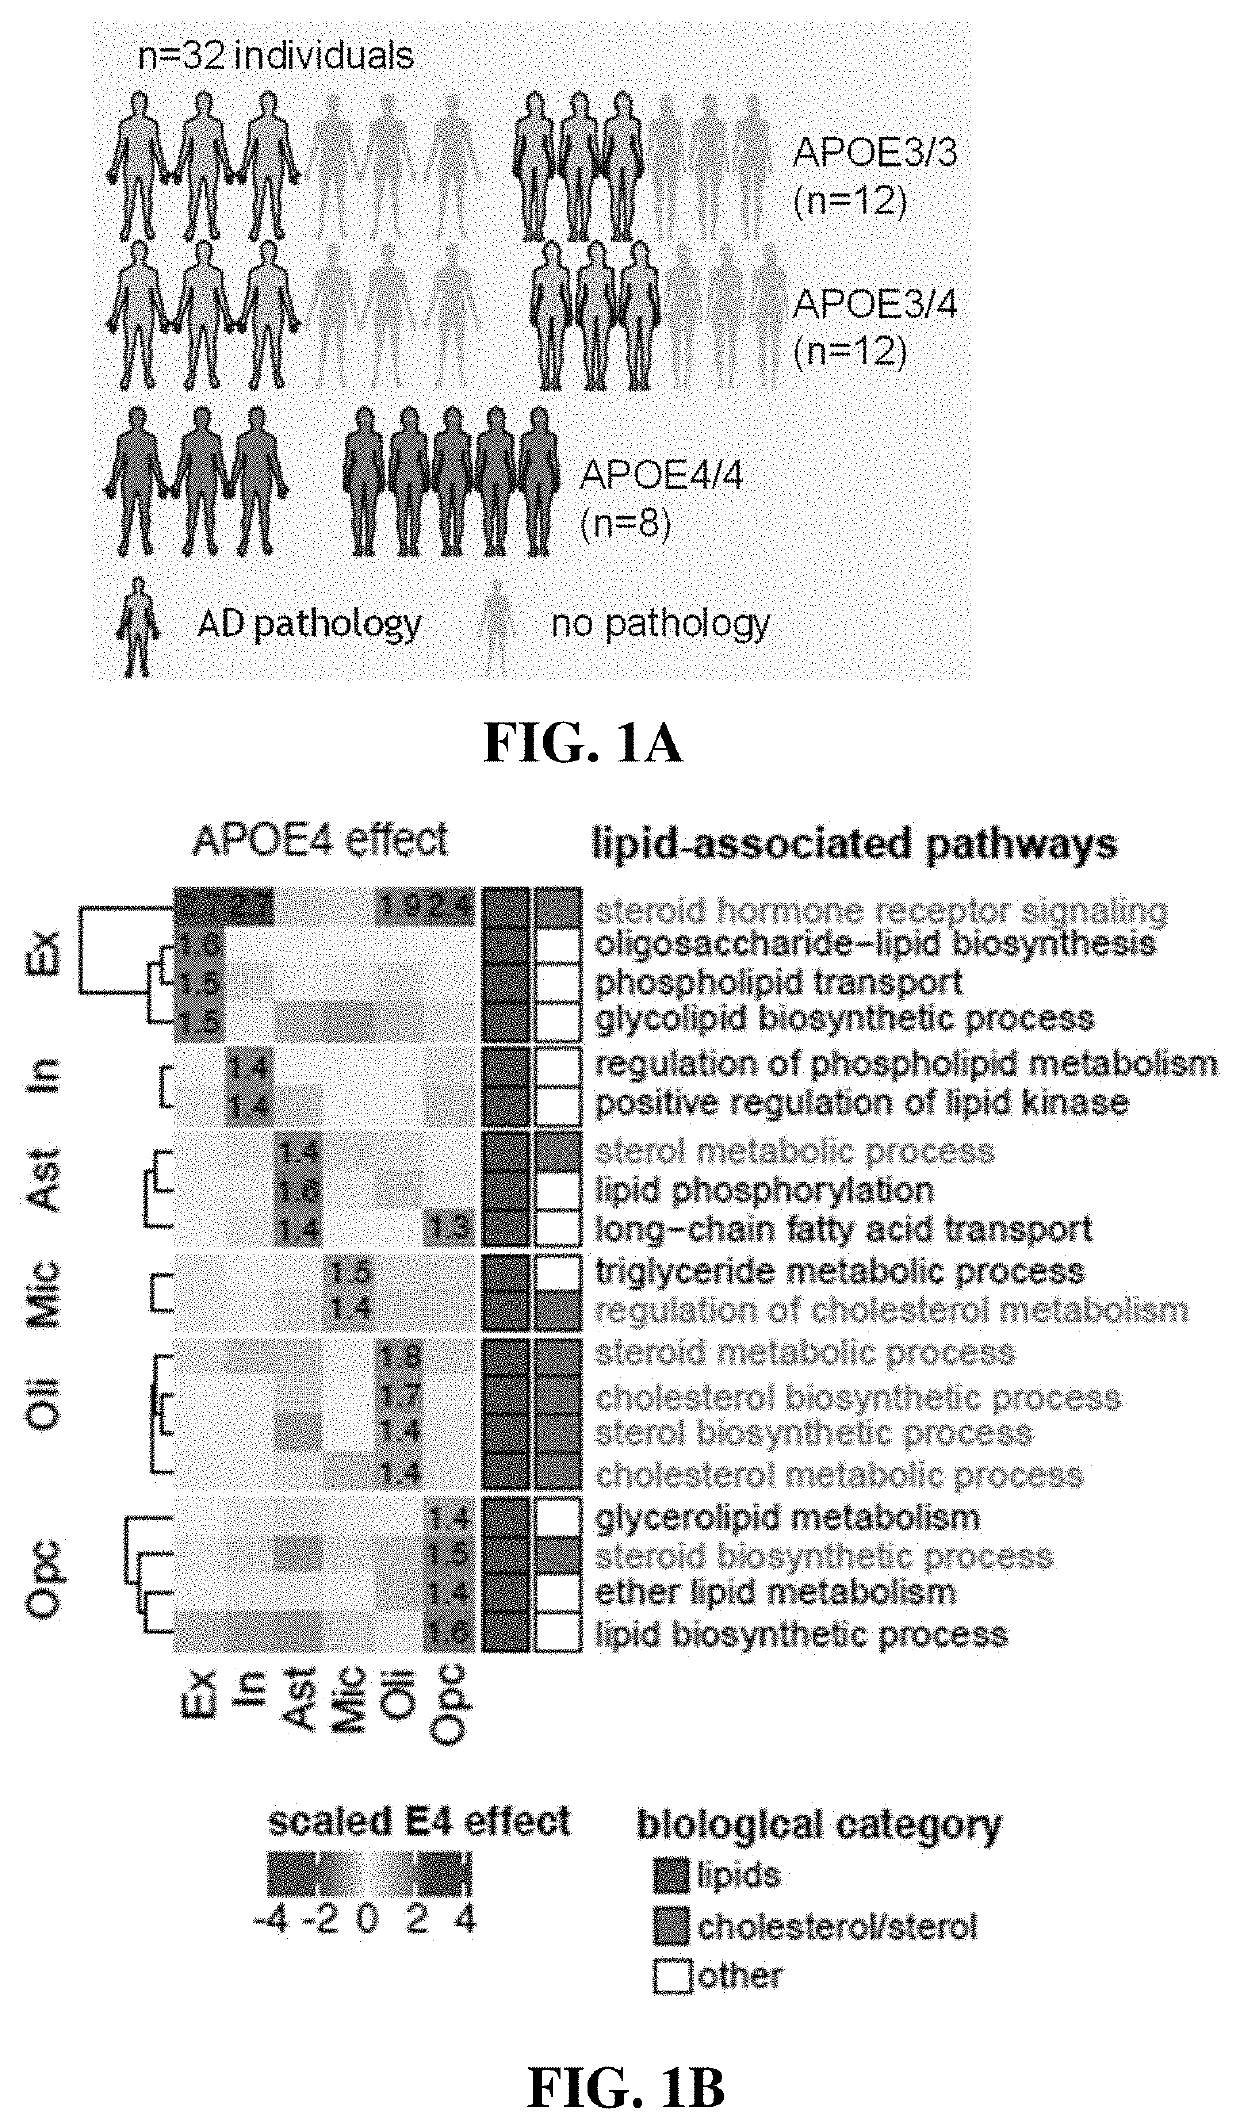 Apoe4 impairs myelination via altered cholesterol biosynthesis and transport in oligodendroglia